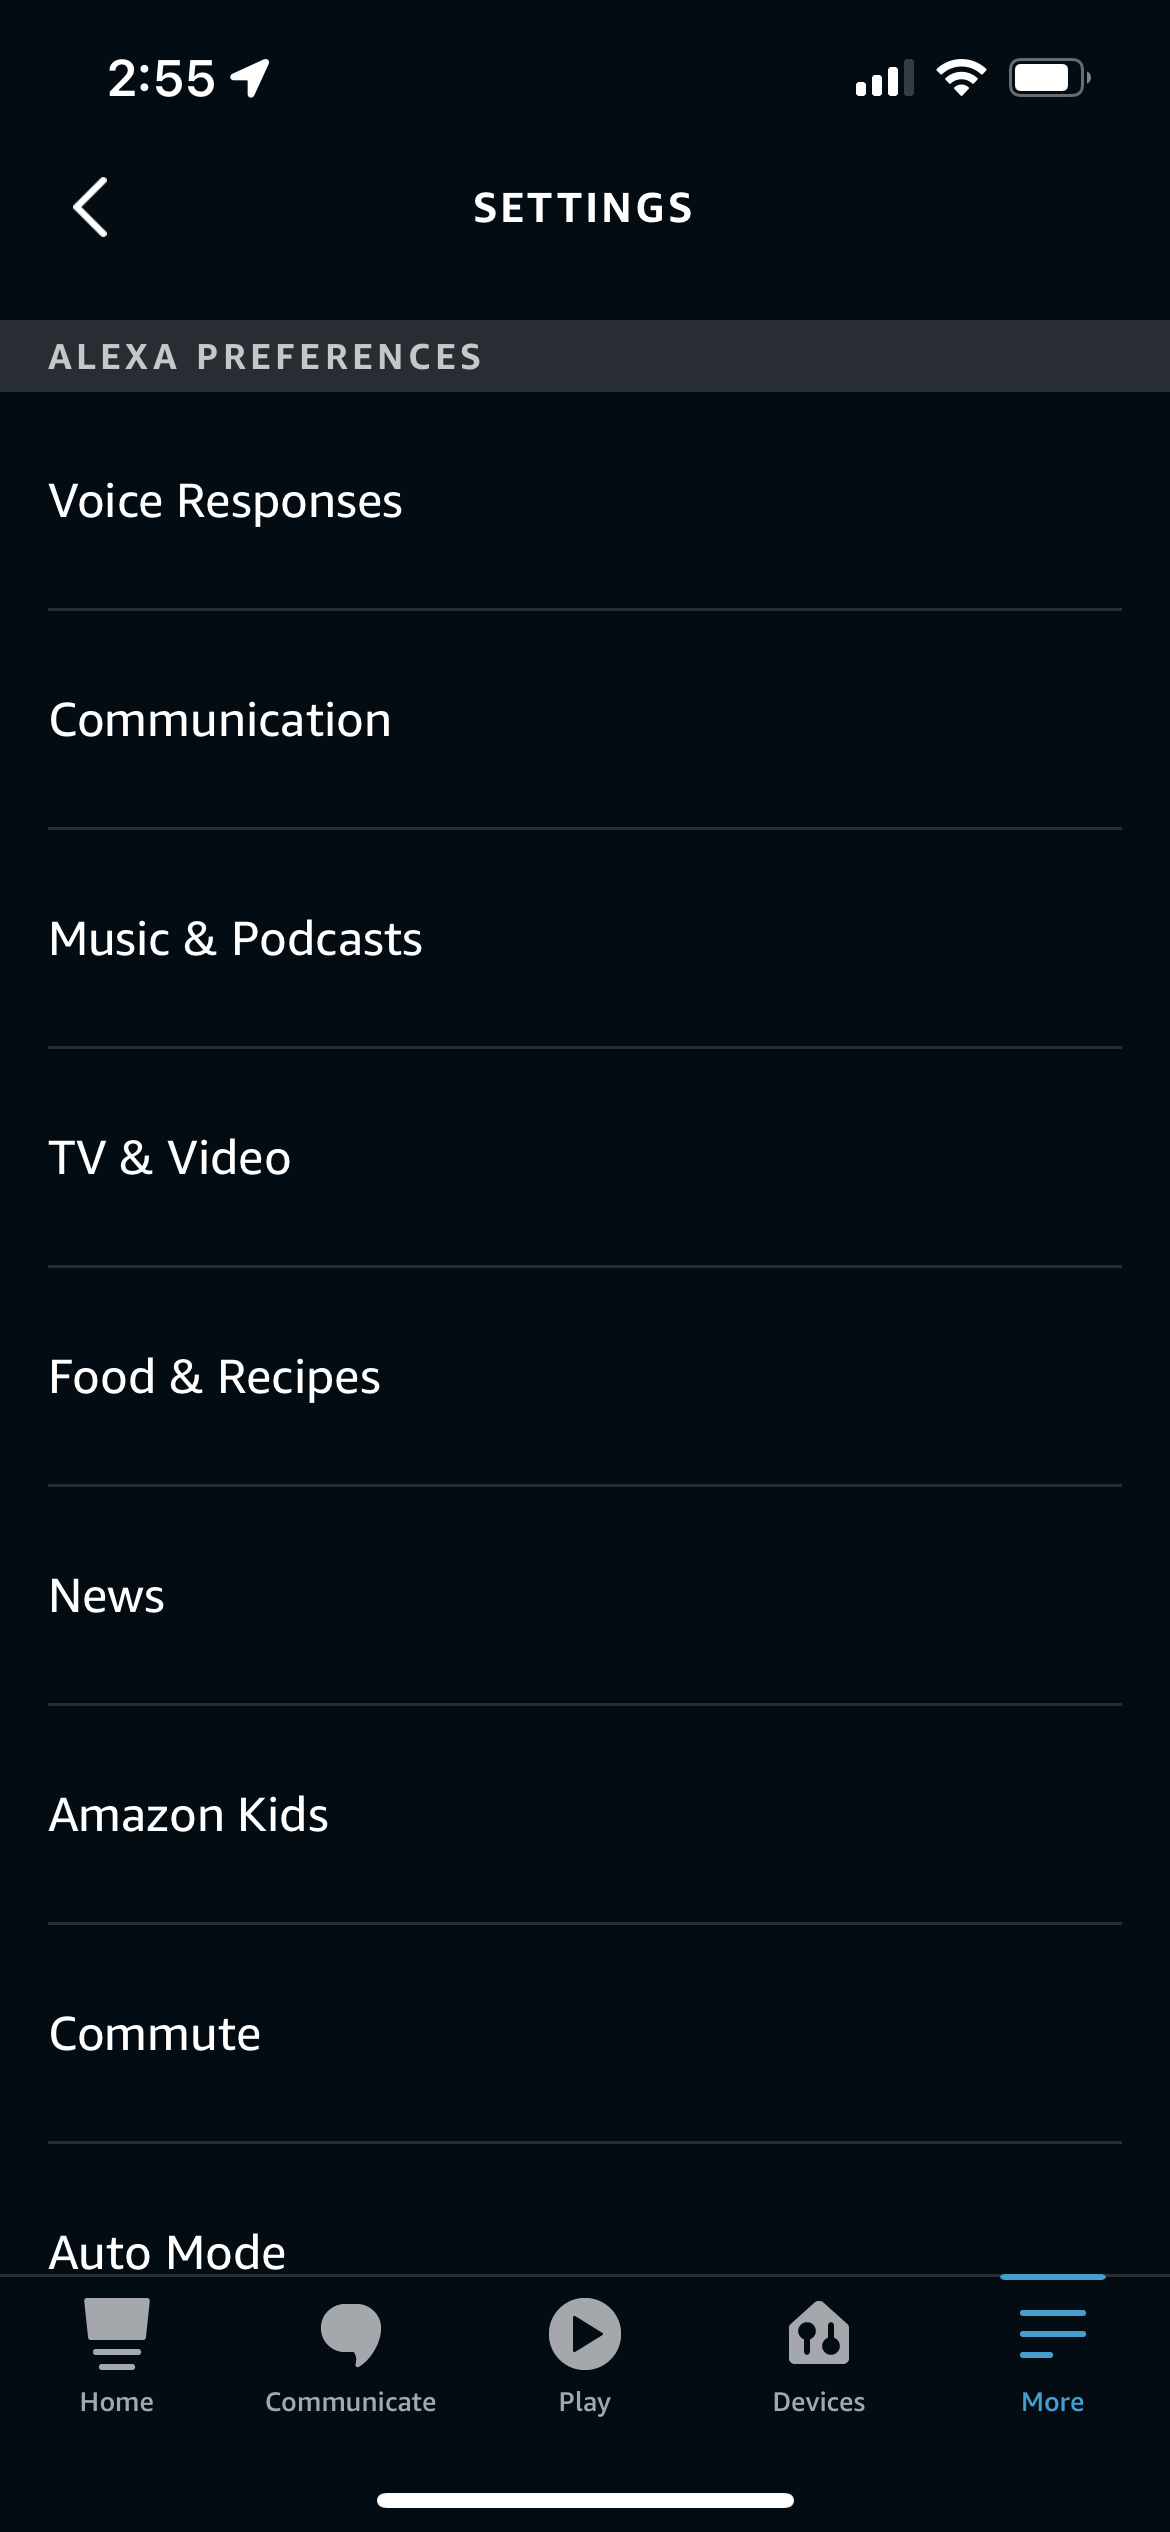 Preferences in the Alexa app